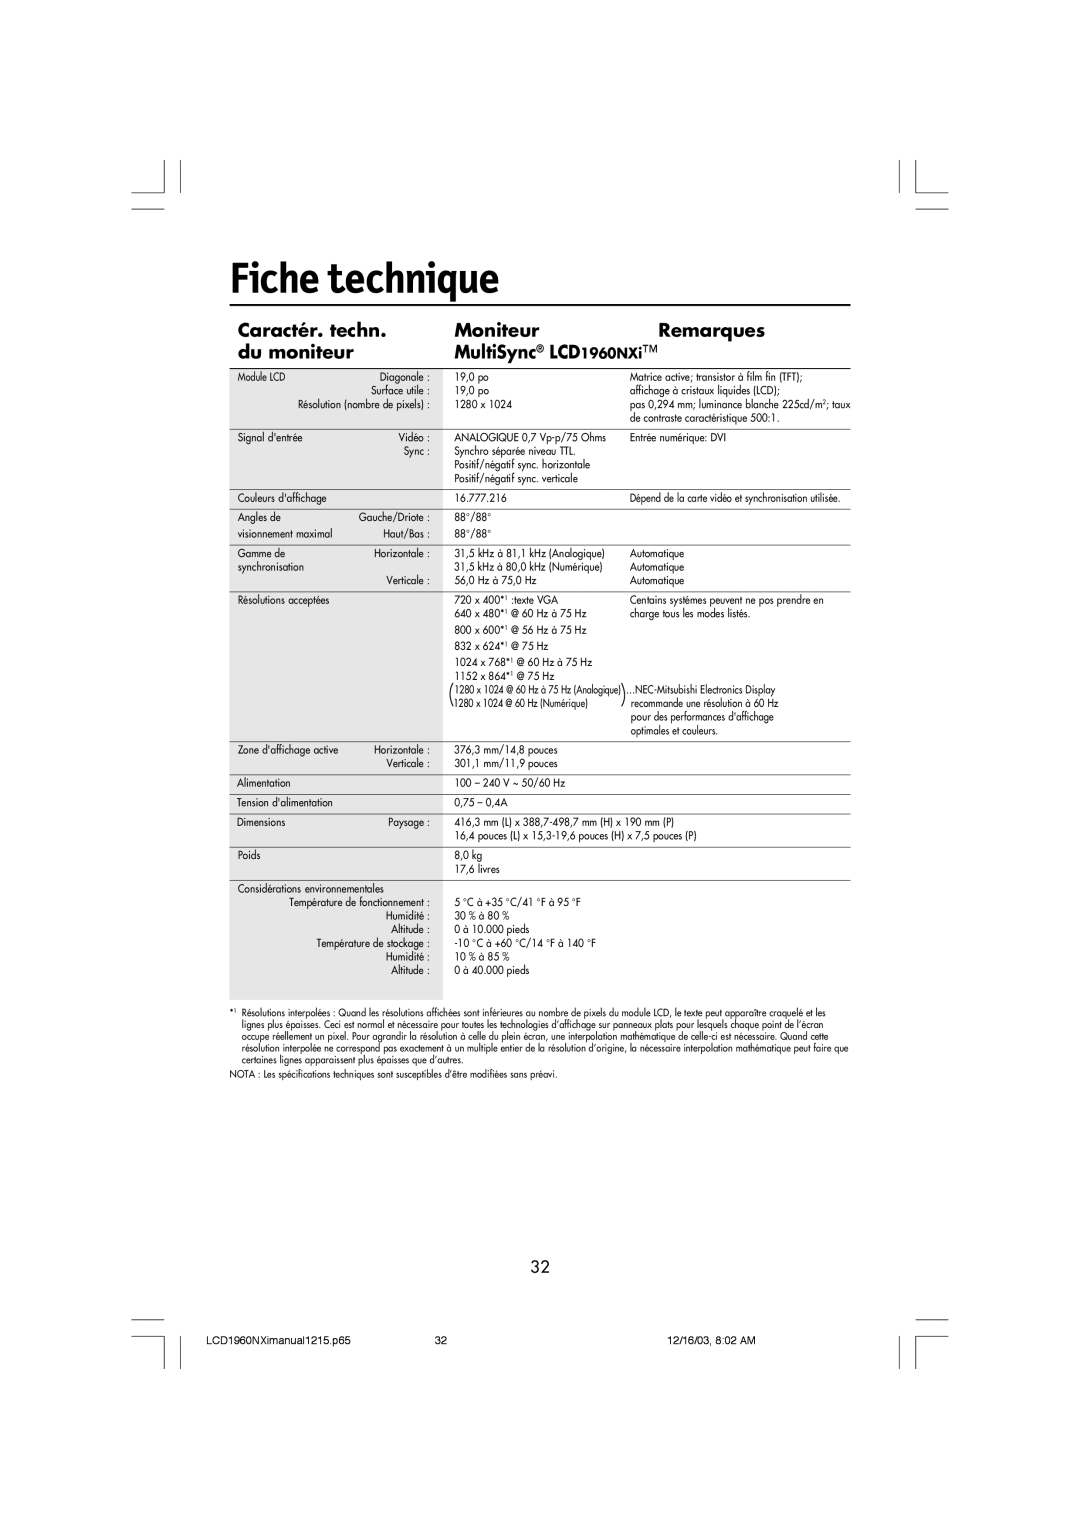 NEC LCD1960NXI manual Fiche technique, Caractér. techn, Moniteur, Remarques, du moniteur, MultiSync LCD1960NXiª 